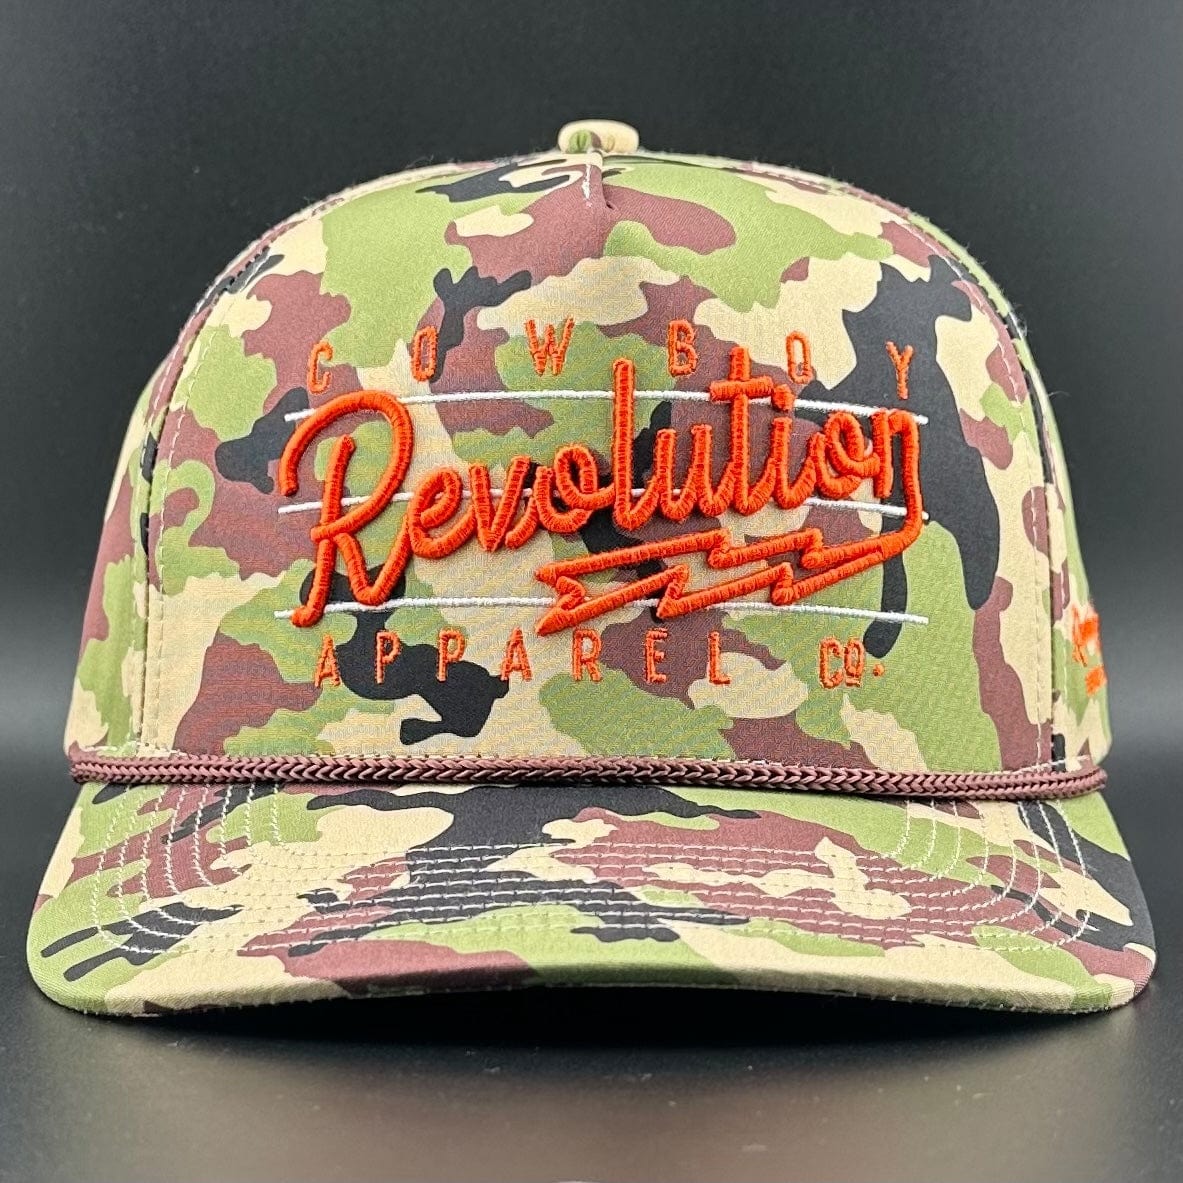 Cowboy Revolution Apparel Co. Hats One Size Fits Most “Lightning" Woodland Camo - Cowboy Revolution 5-panel Performance Hat